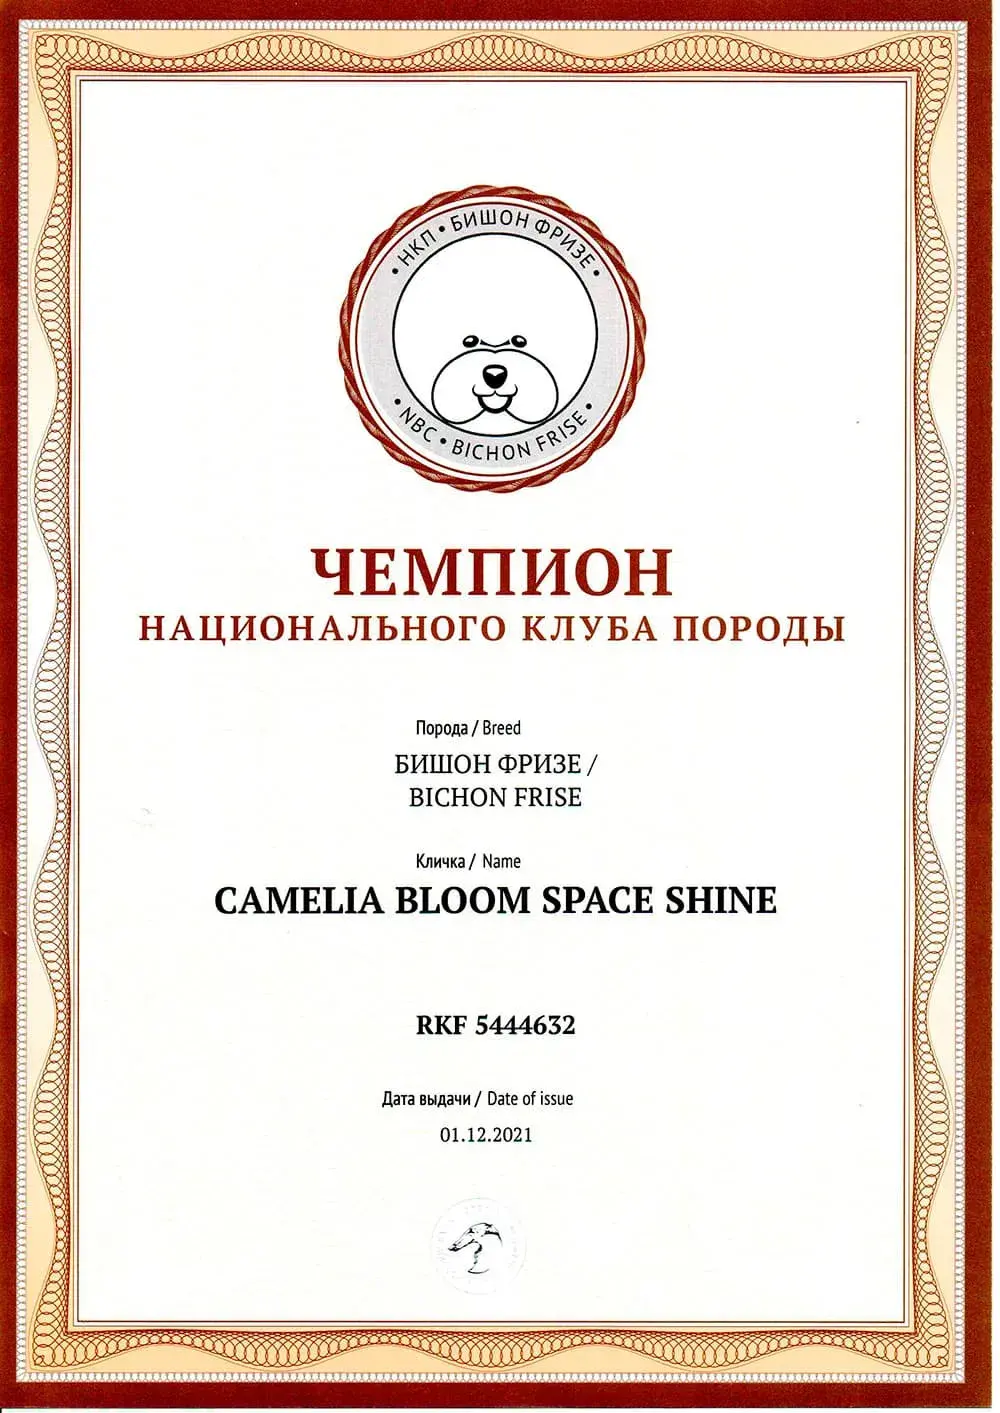 Спайки  Camelia Bloom Space Shine чемпион национального клуба породв, питомник бишон фризе Агнелль де неж, 2020 год